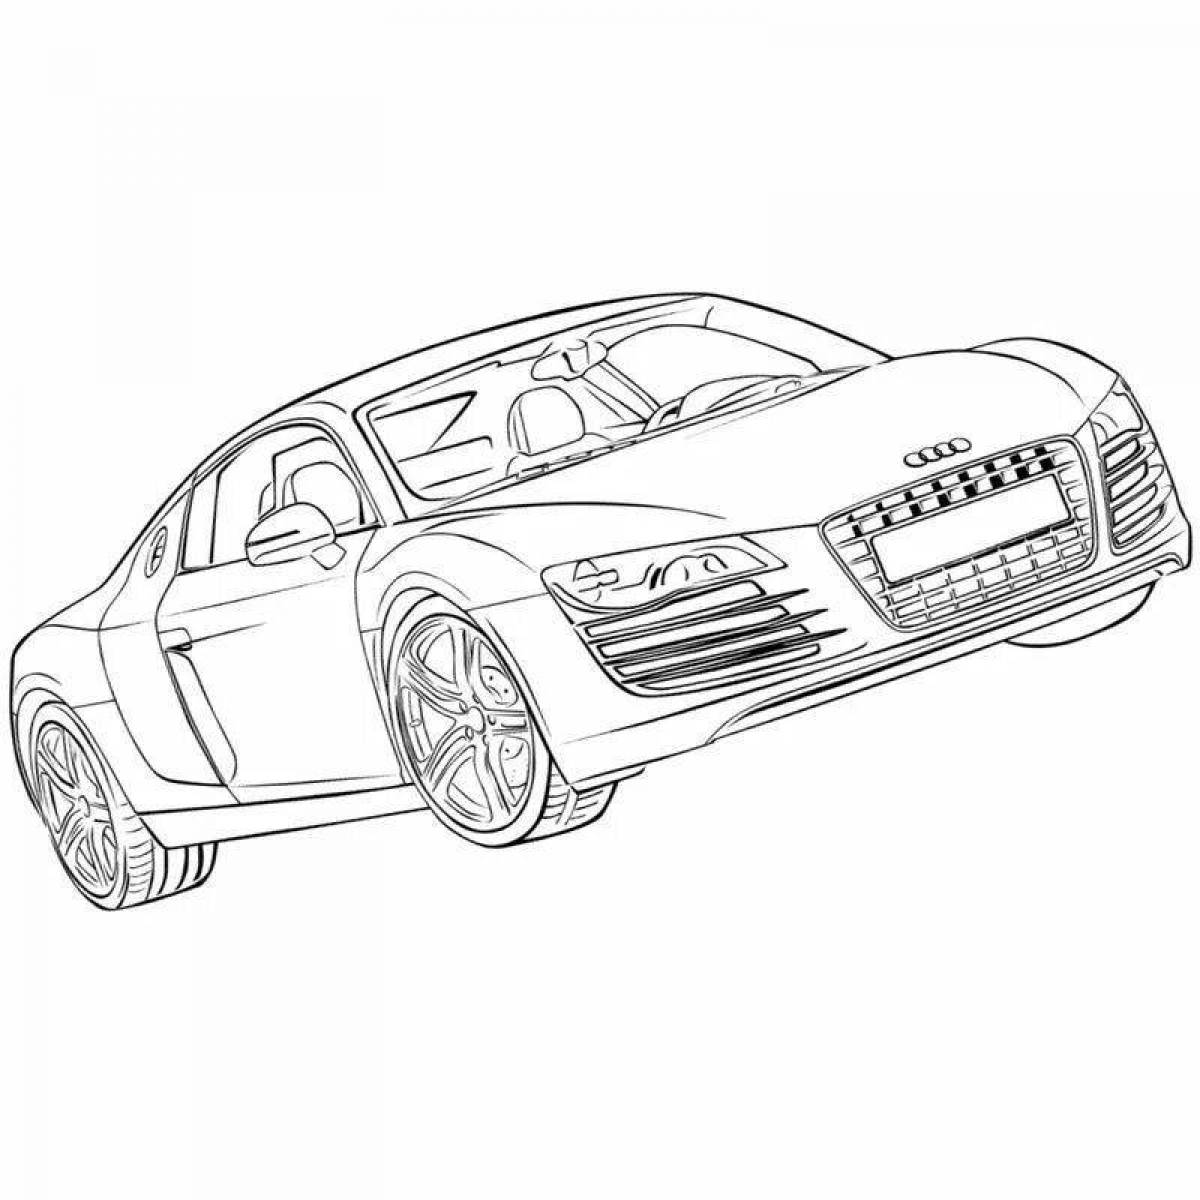 Audi r8 bright coloring